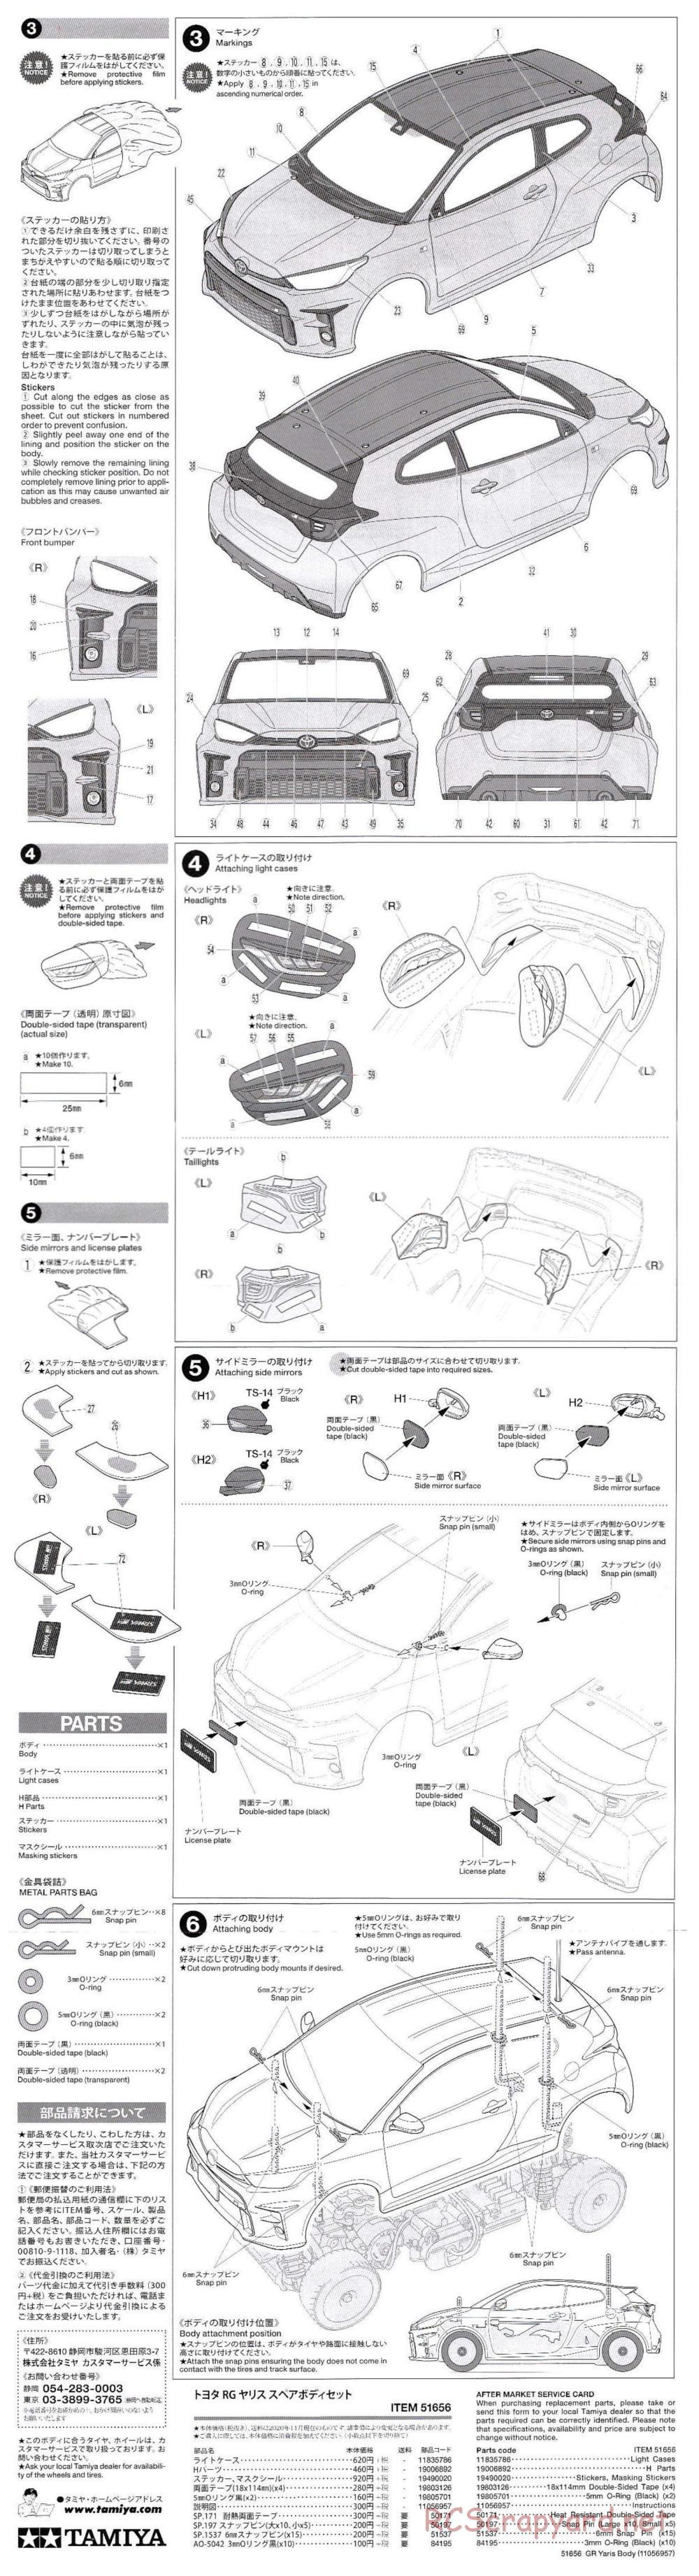 Tamiya - Toyota GR Yaris - M-05 Chassis - Body Manual - Page 2